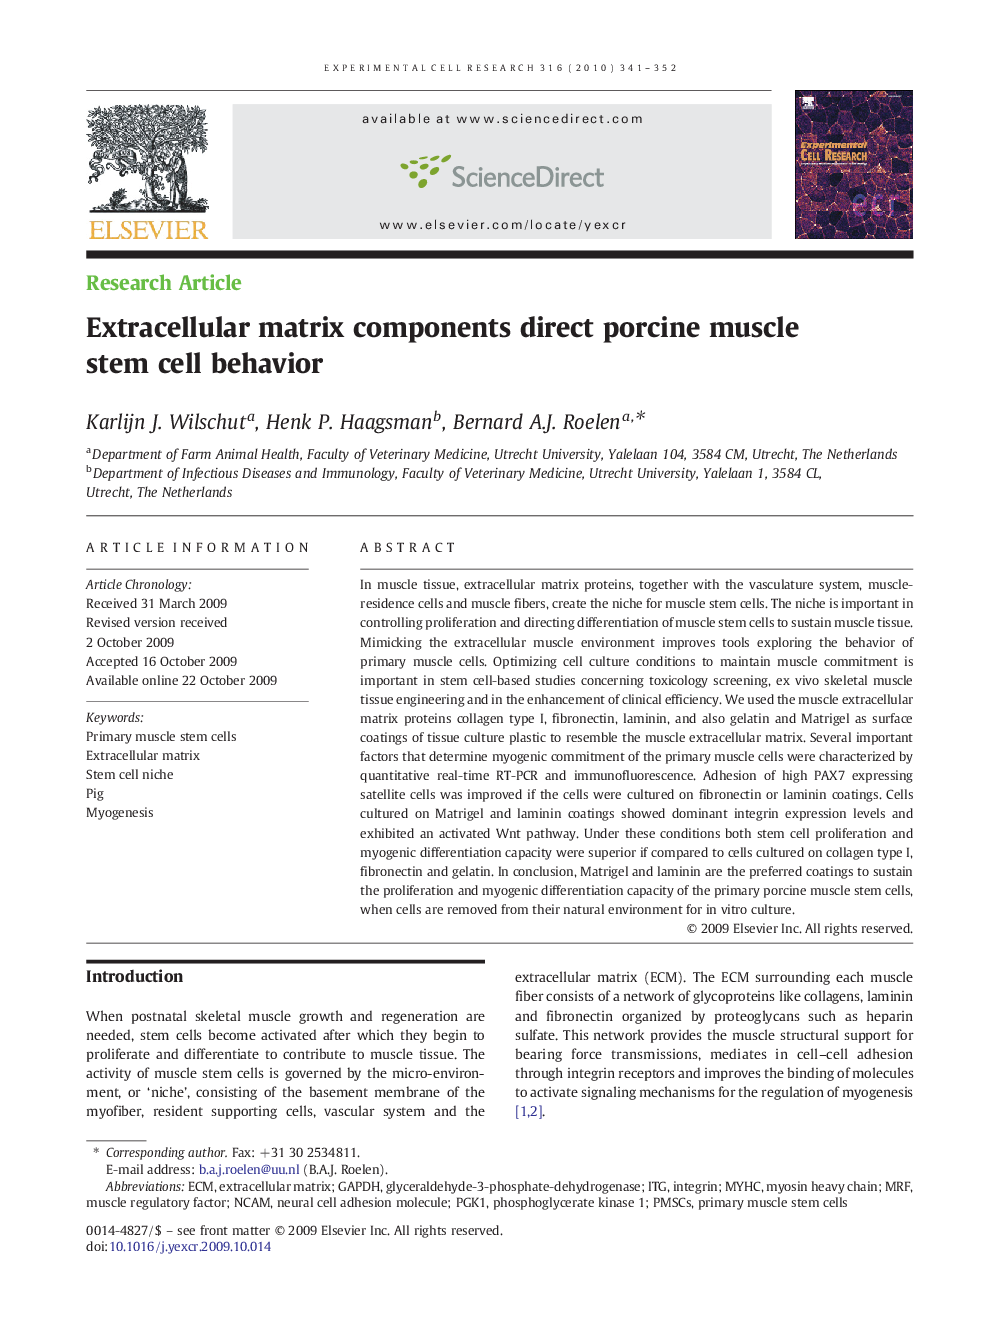 Extracellular matrix components direct porcine muscle stem cell behavior